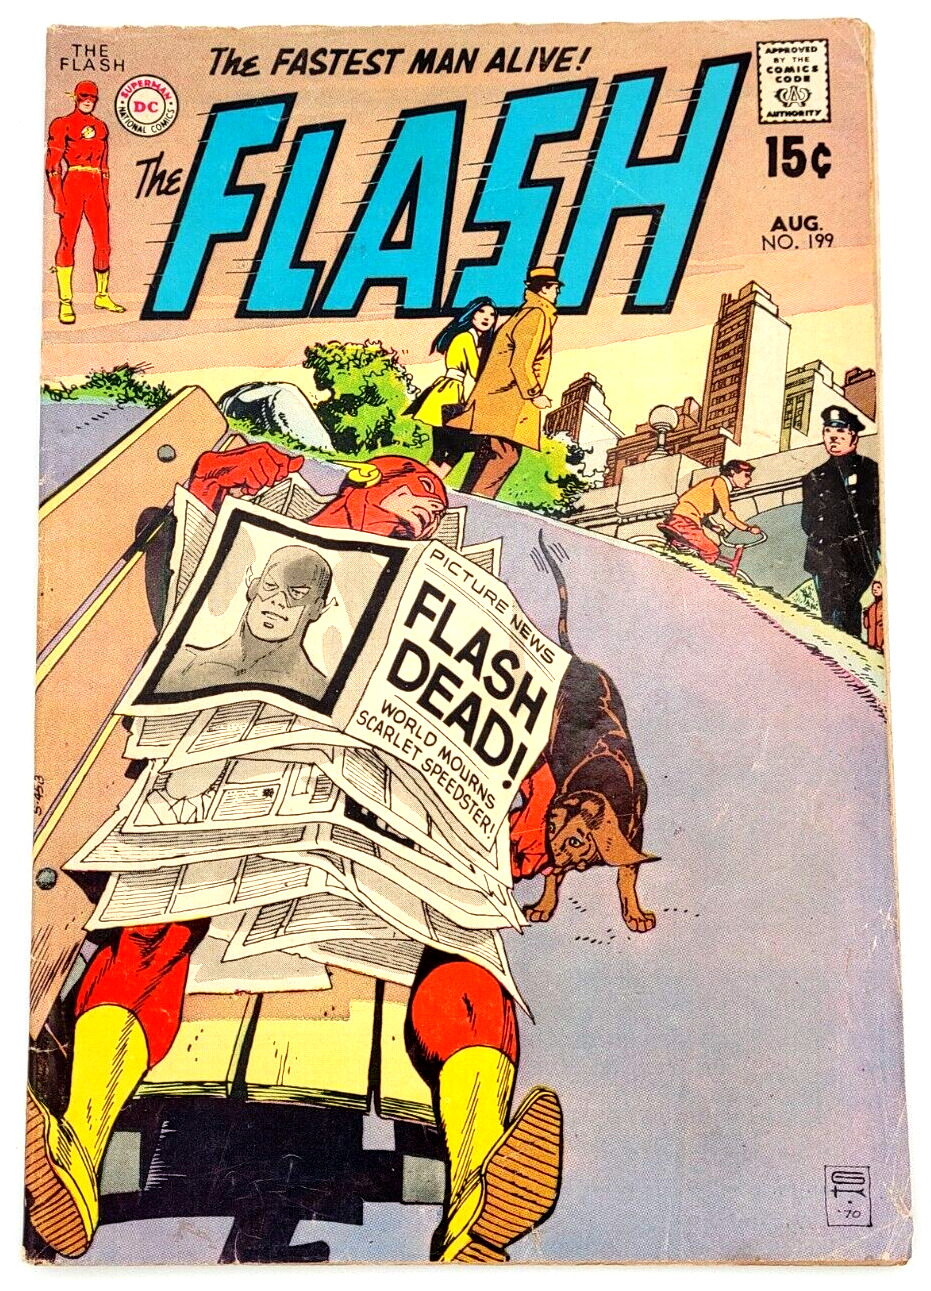 THE FLASH #199 (1970) / VG /  DC COMICS BRONZE AGE